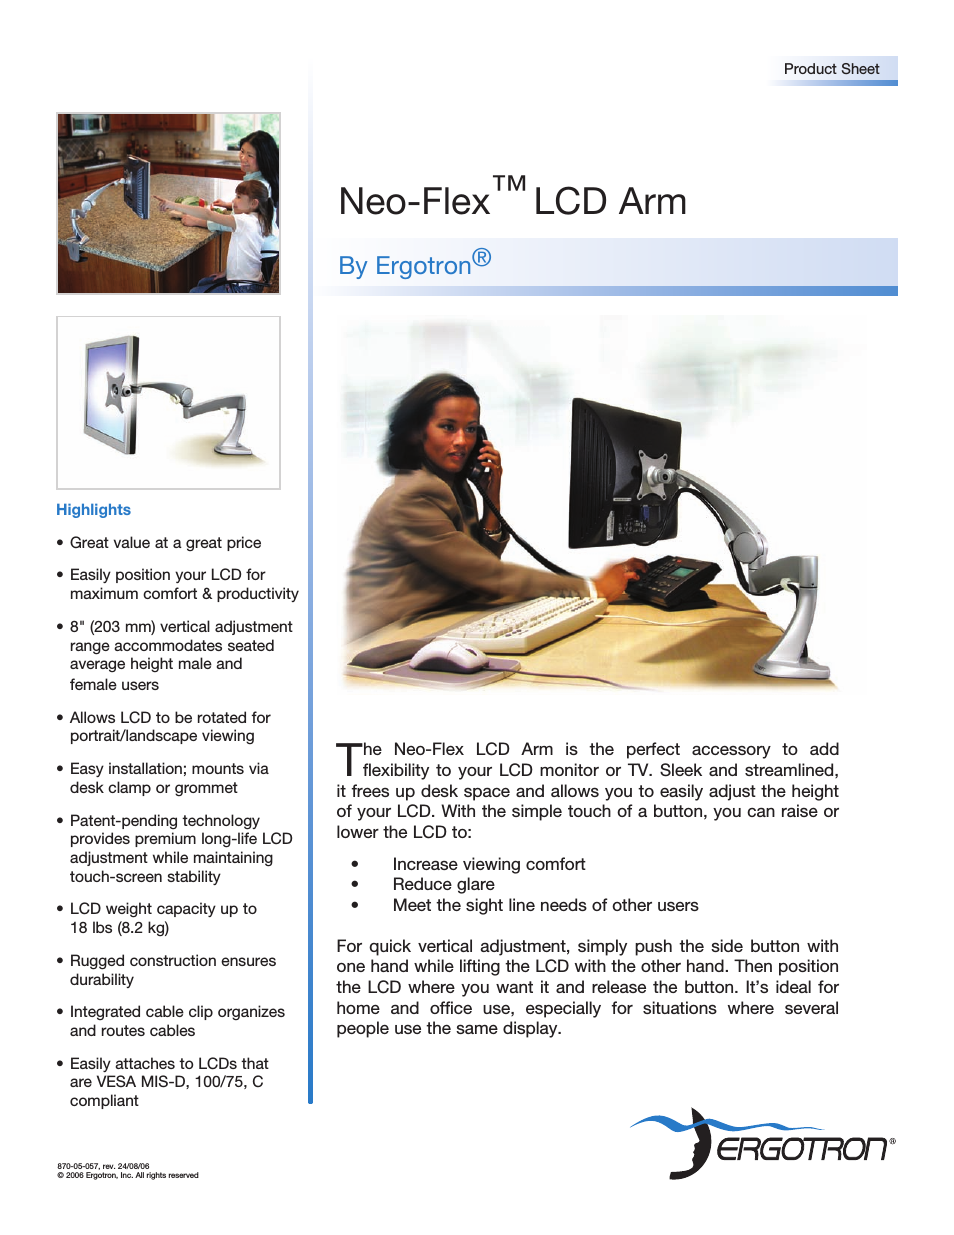 Neo-Flex LCD Arm